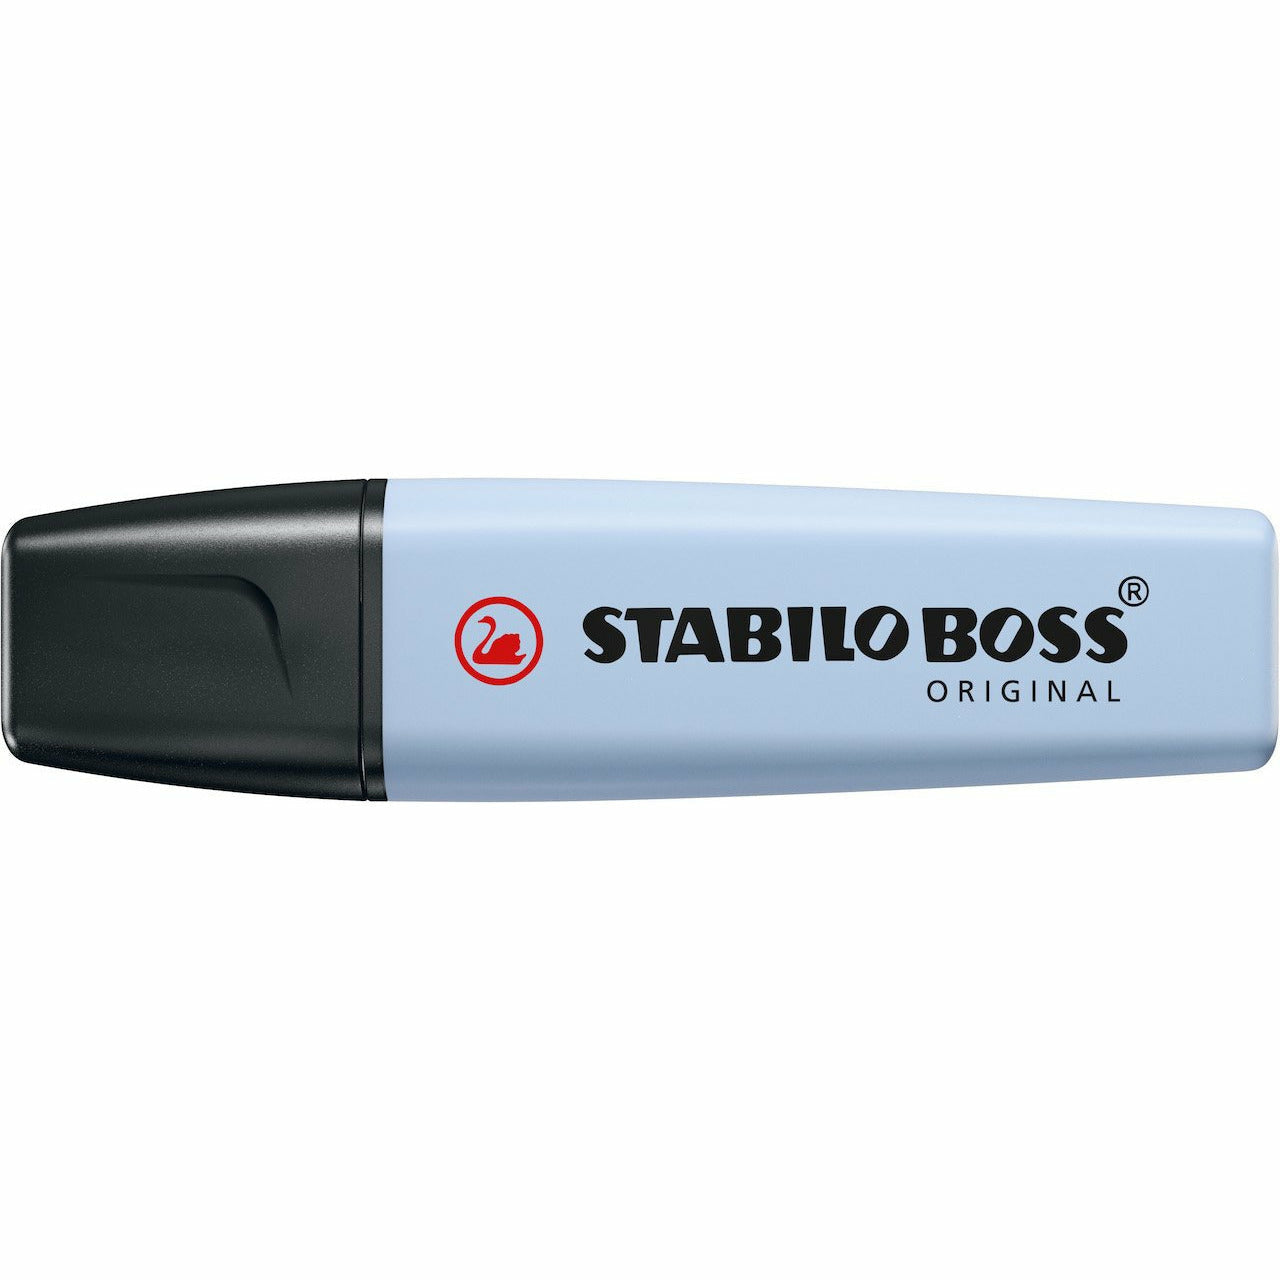 Stabilo Boss pastell cloudy blue